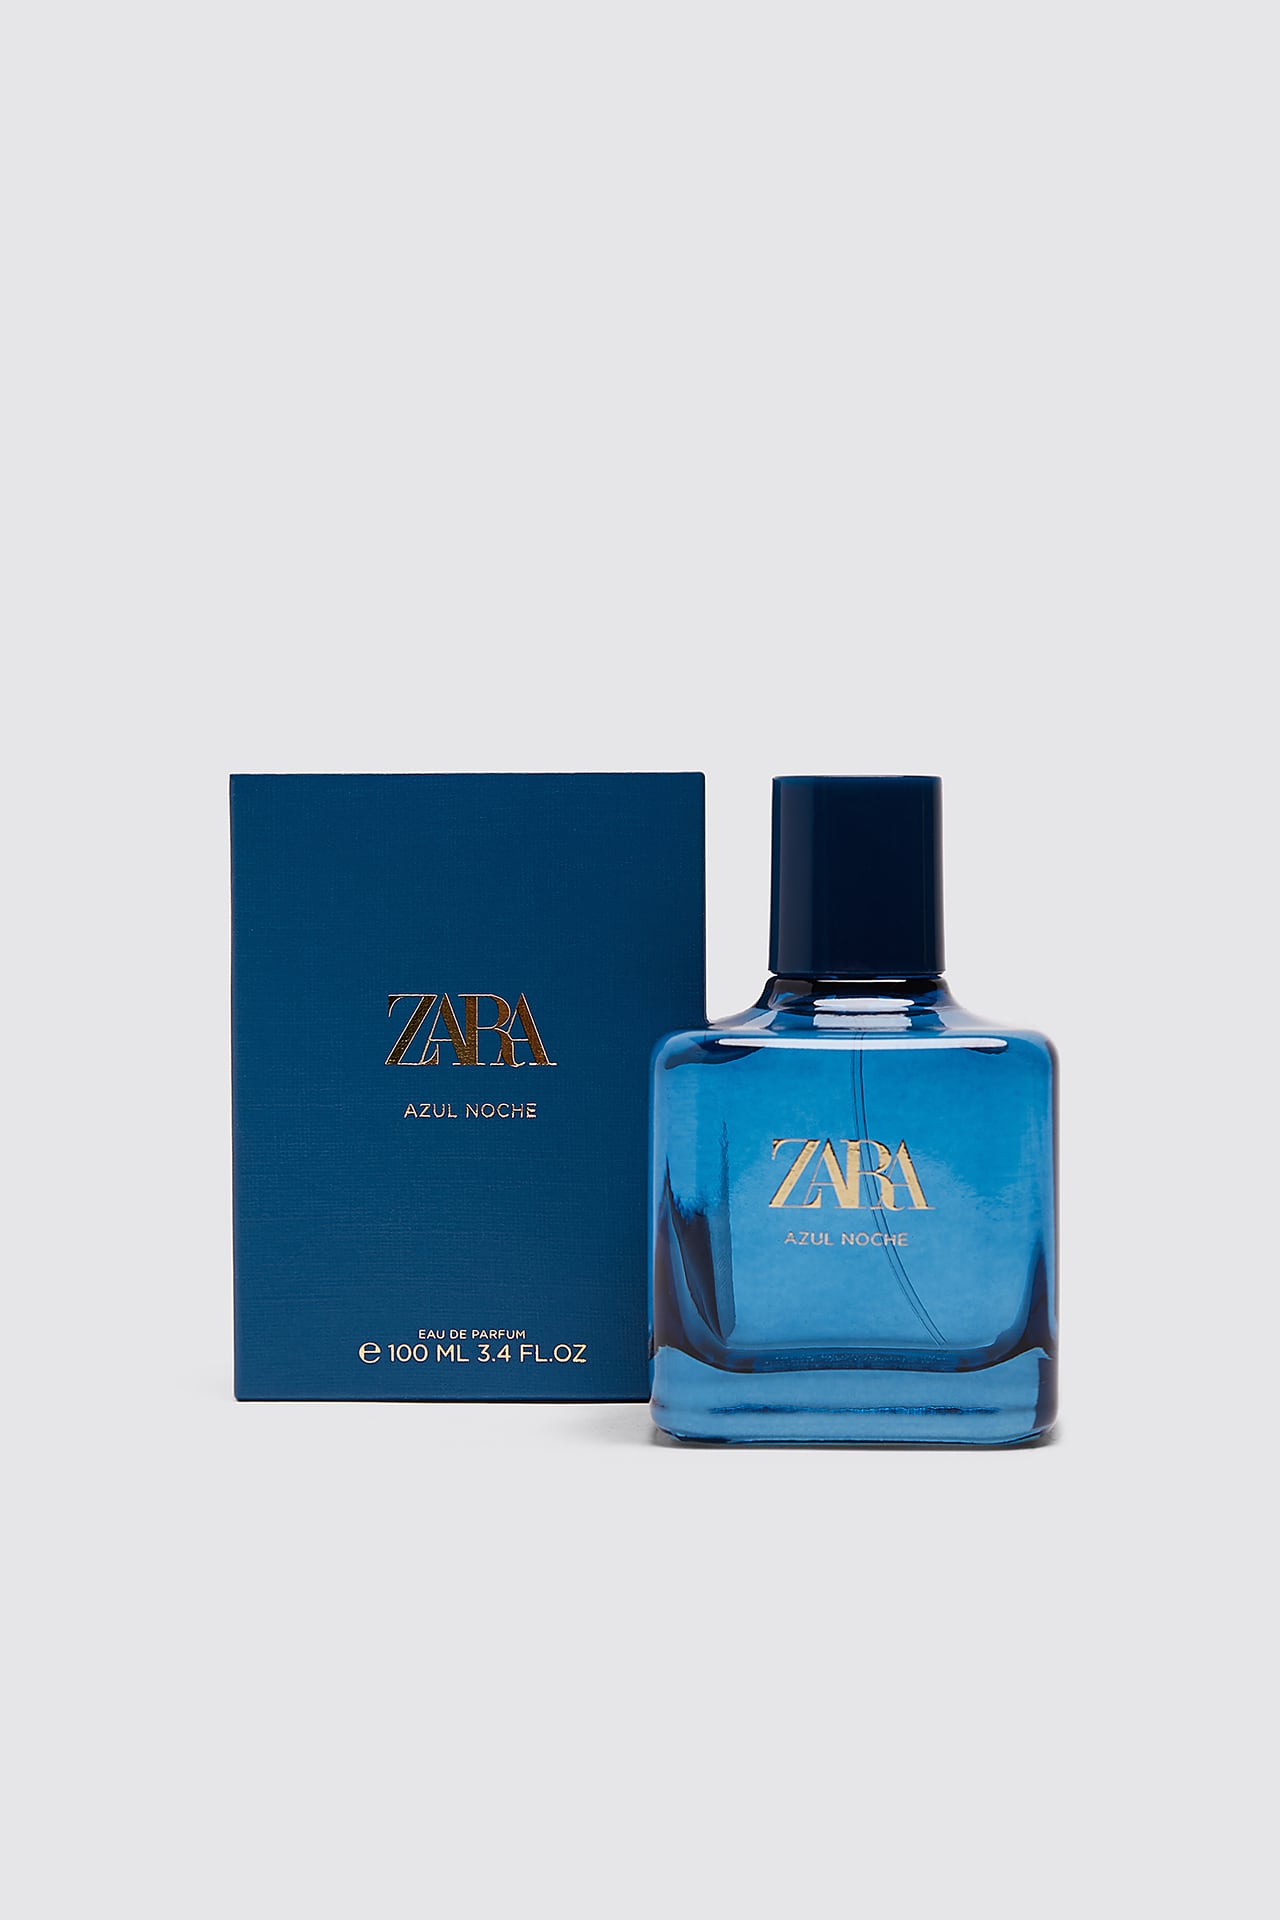 Azul Noche Zara perfume - a new 